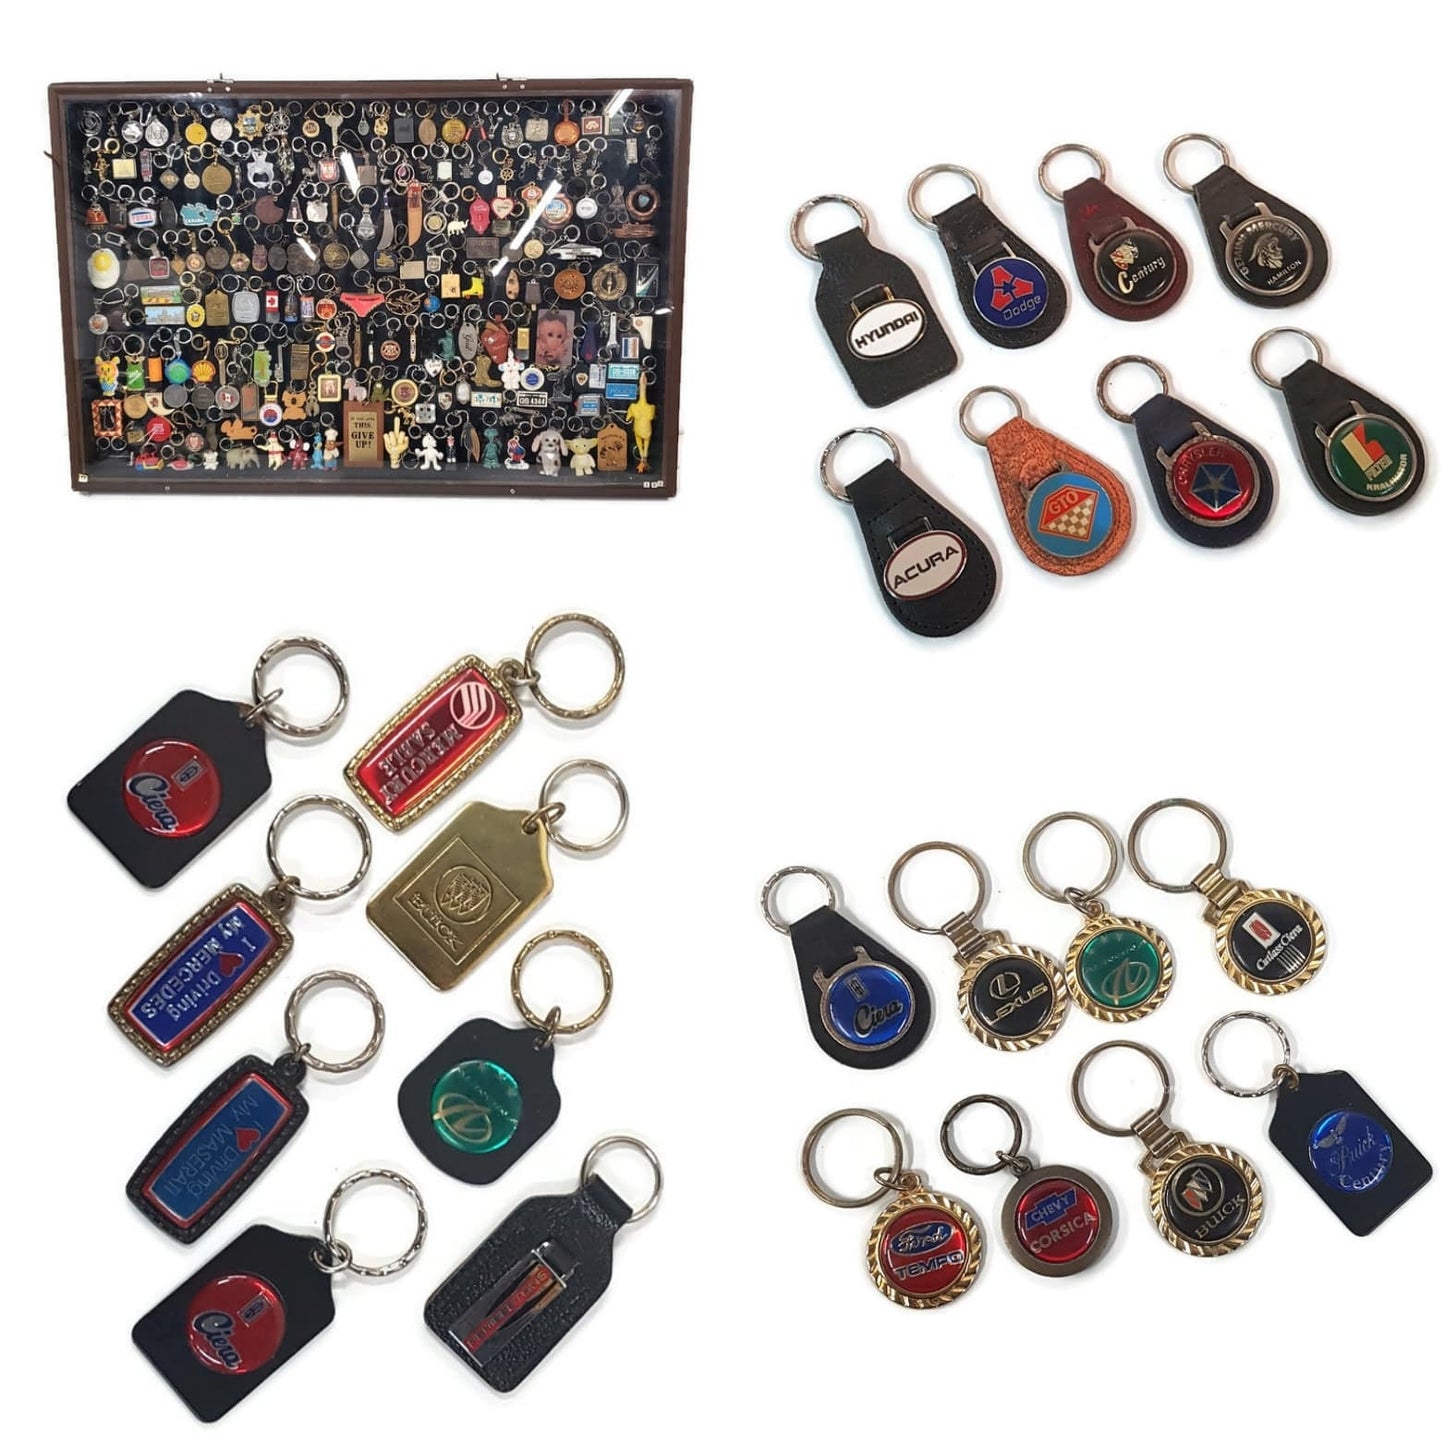 Camaro chevrolet Key Chain Keychain Key Fob Keytag Vintage Automotove Keychain Gift Collectible